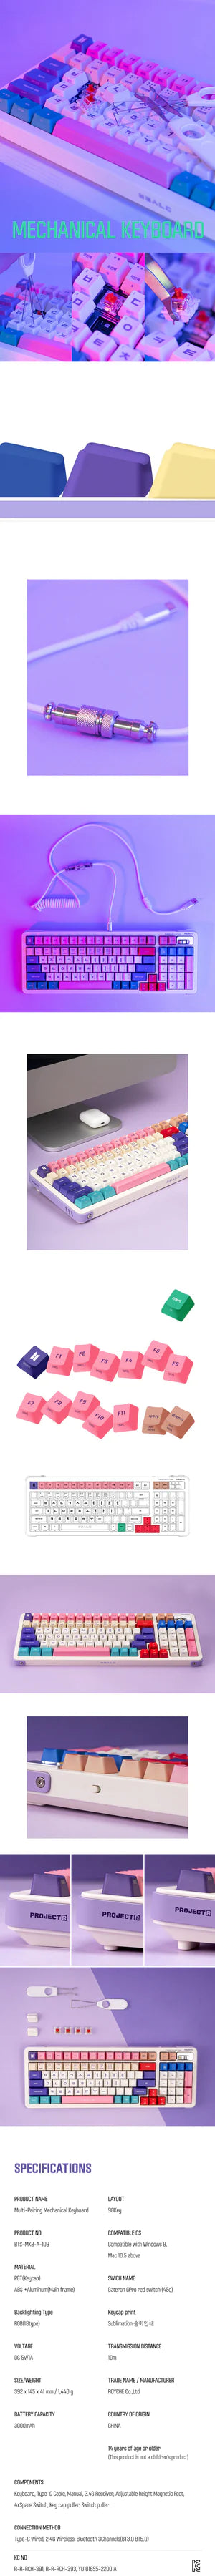 BTS (Limited Edition) Hangeul Keyboard